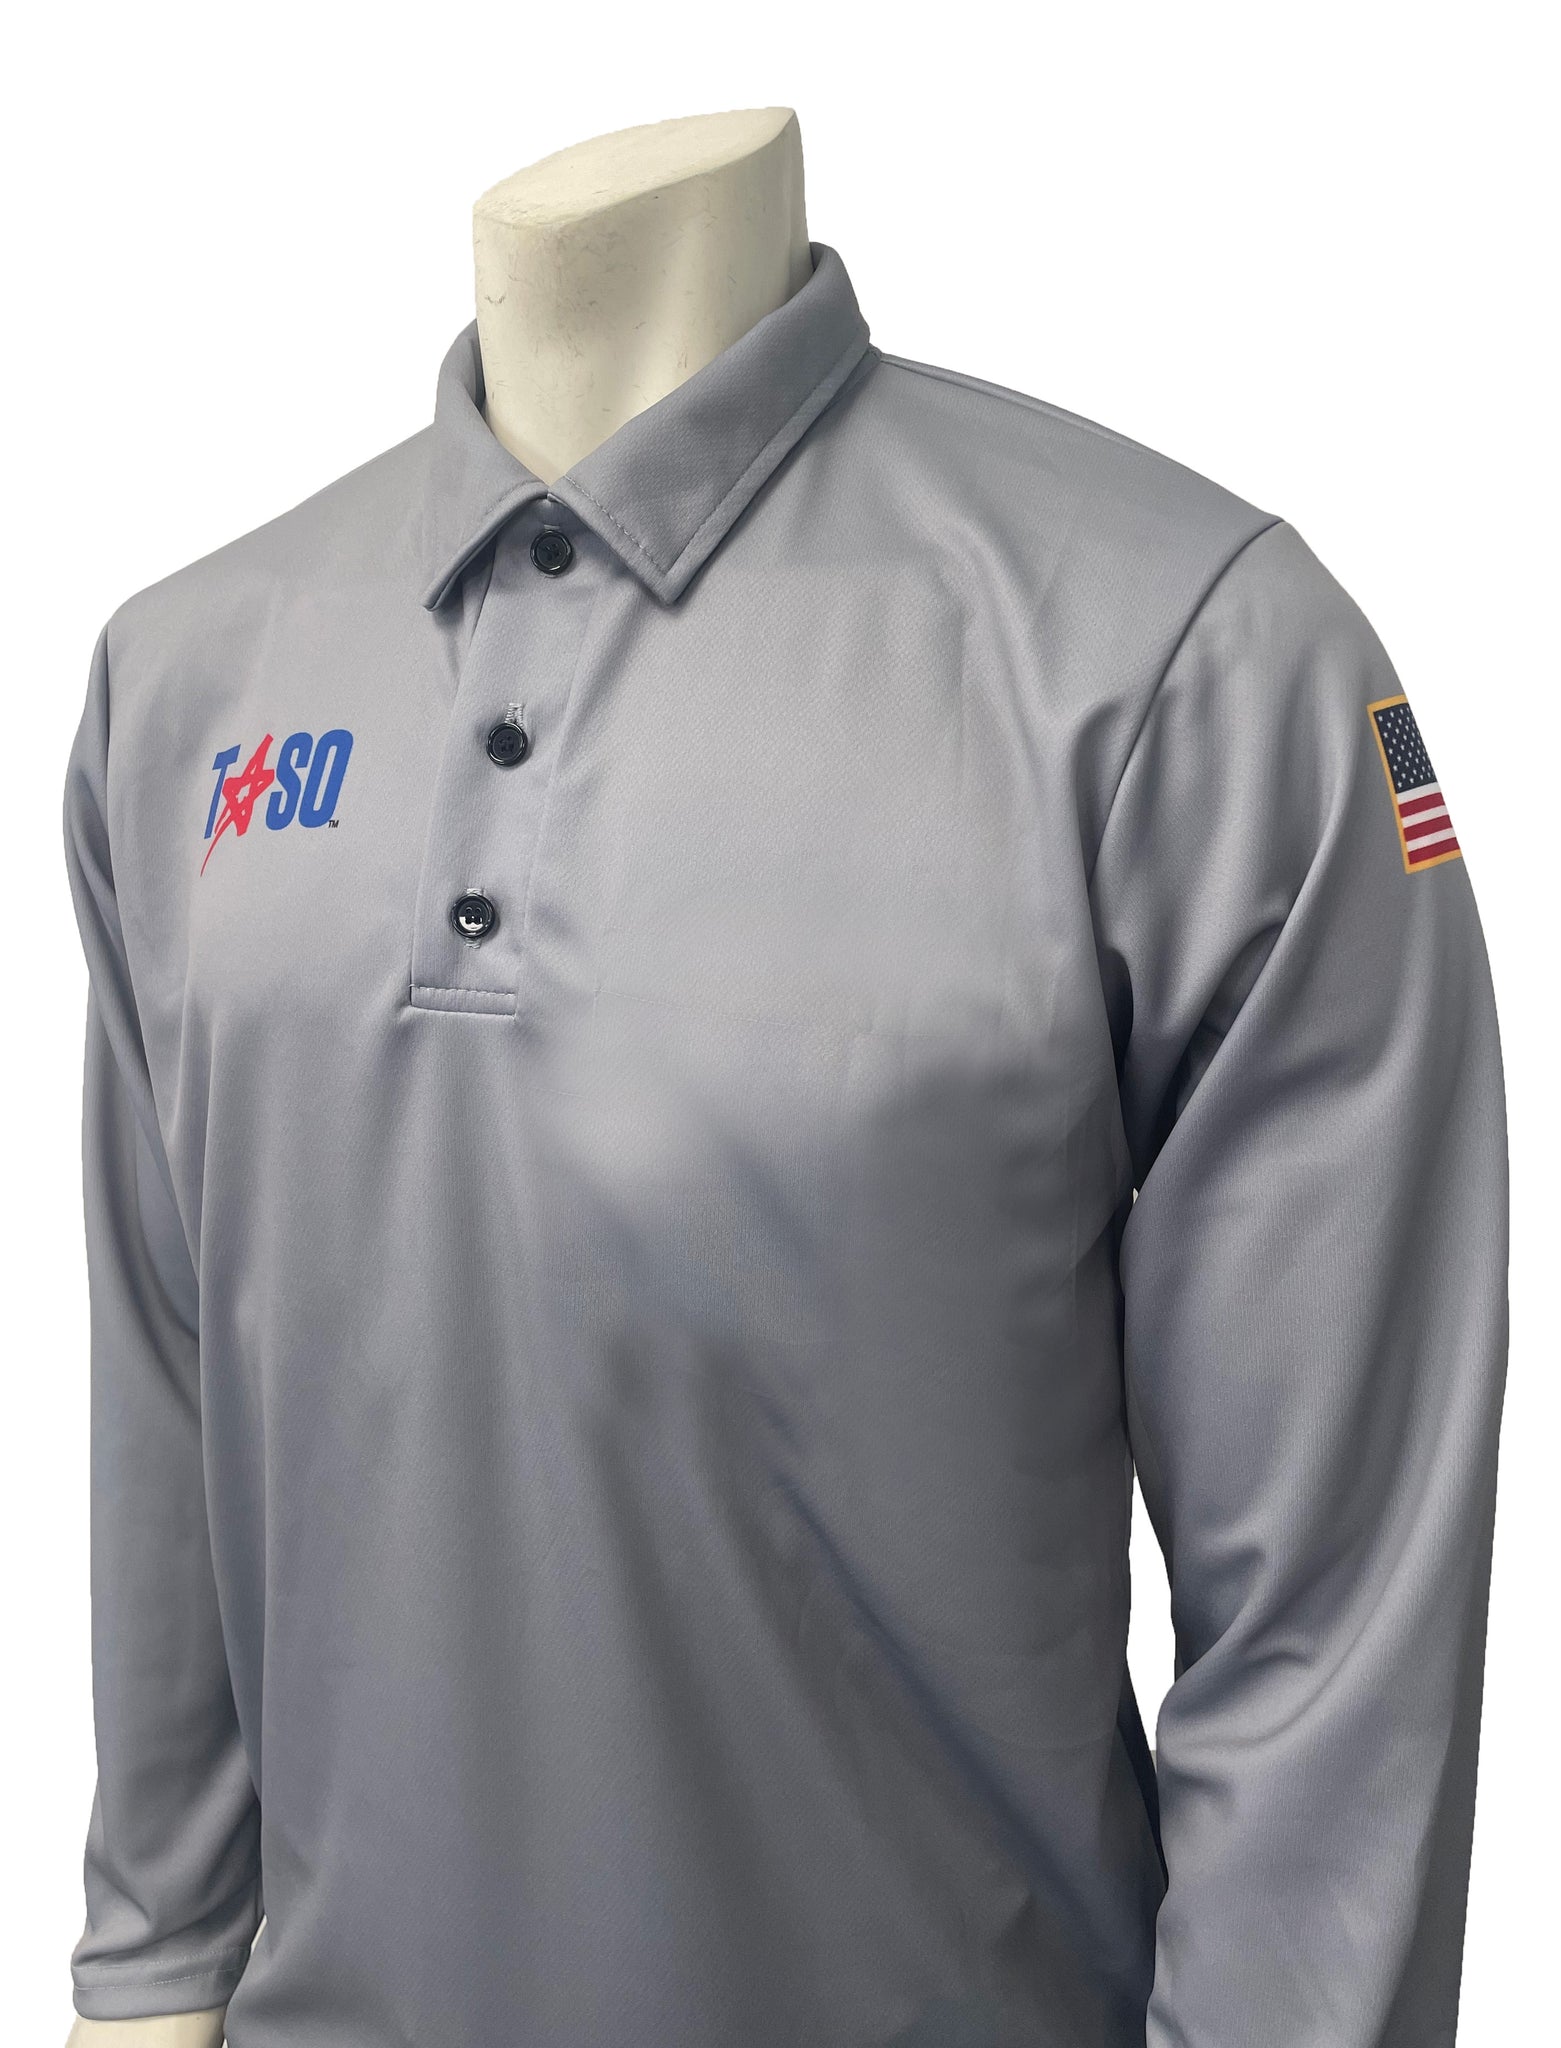 USA434TASO -GRY- Smitty "Made in USA" - NEW "TASO" GREY Men's Volleyball Long Sleeve Sleeve Shirt